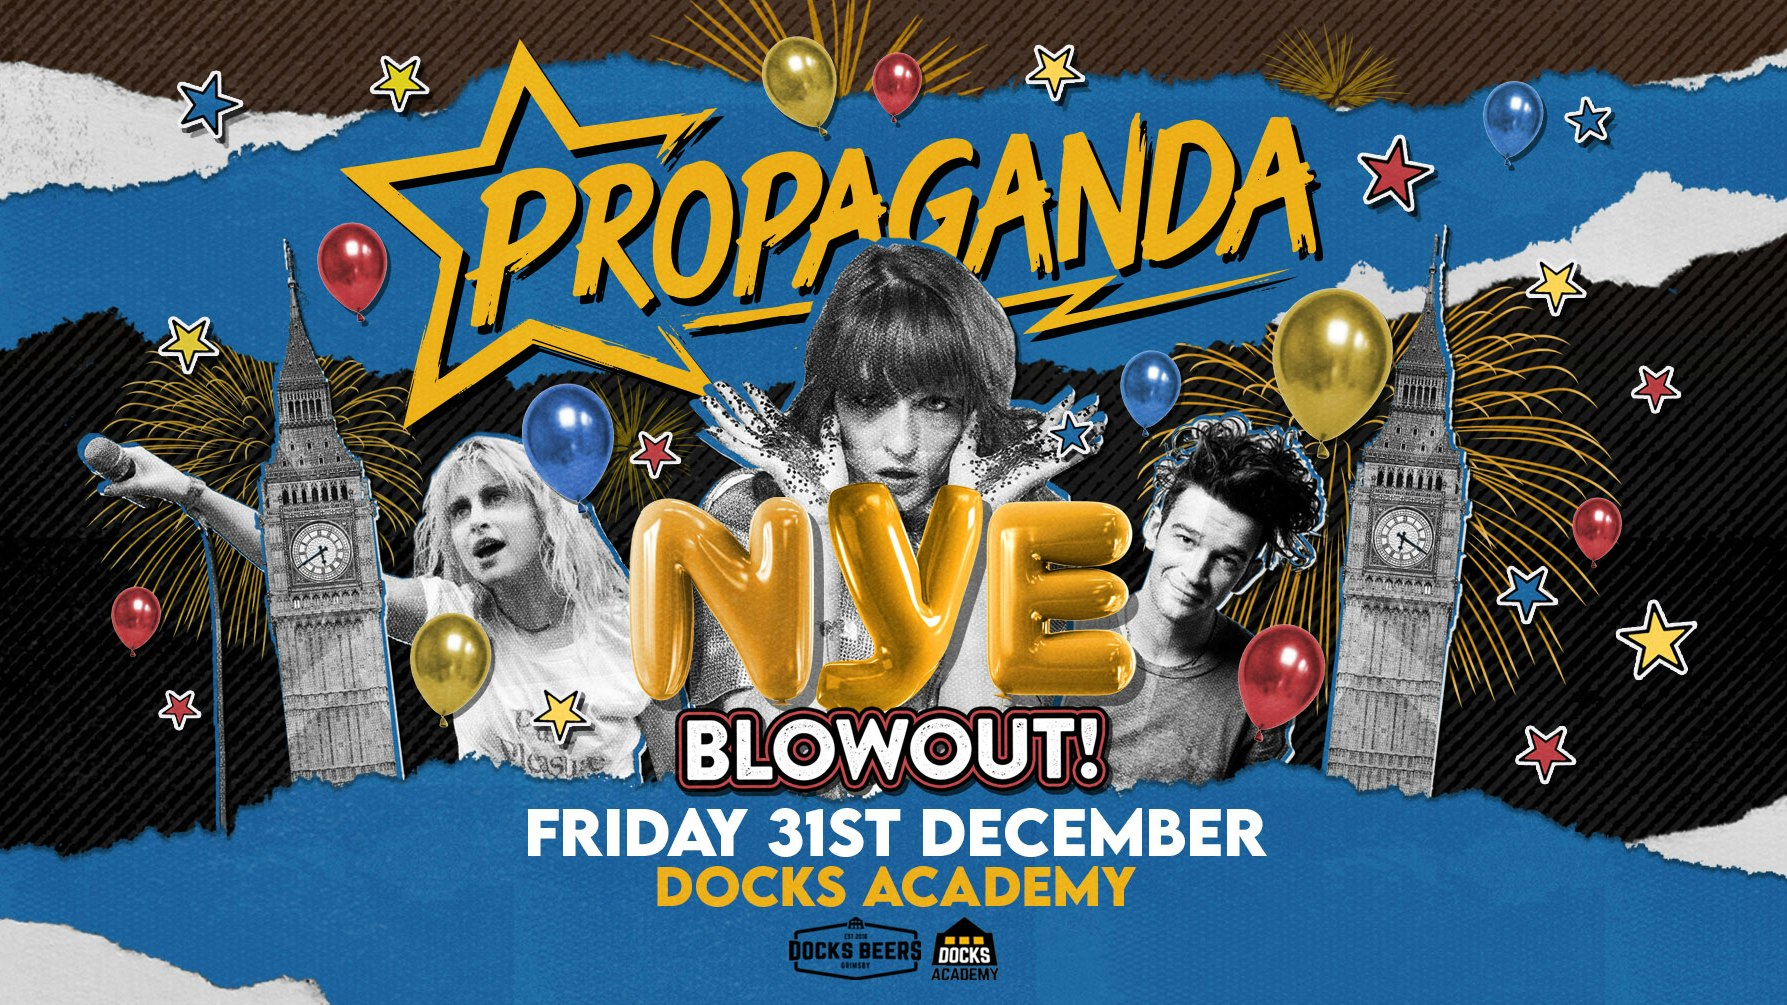 Propaganda – New Year’s Eve Blowout at Docks Academy!